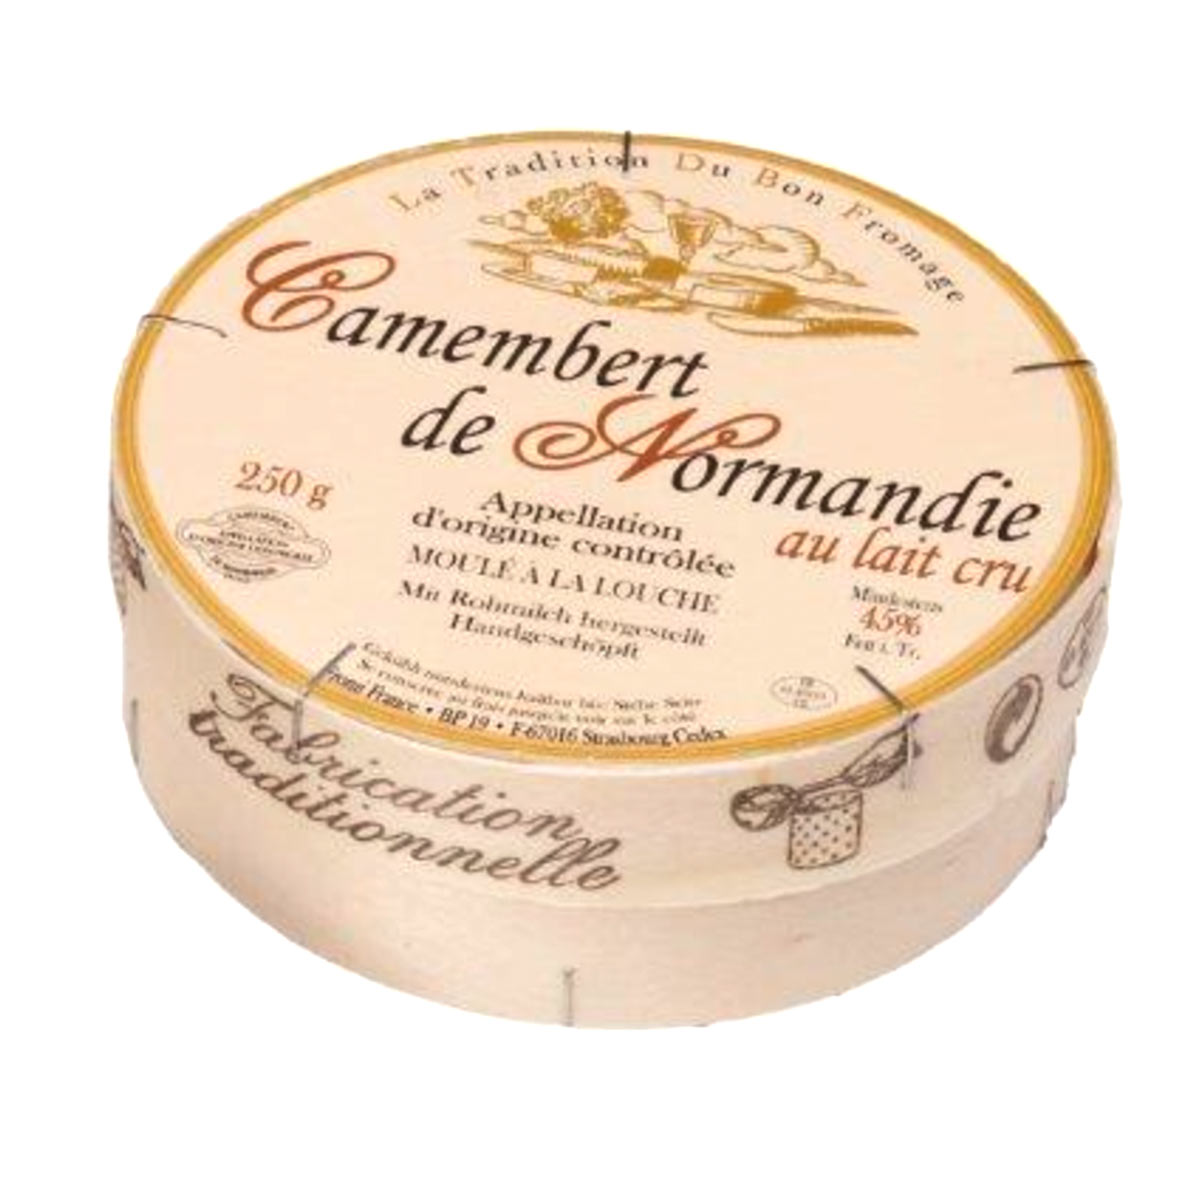 Camembert de Normandie AOC (250g)